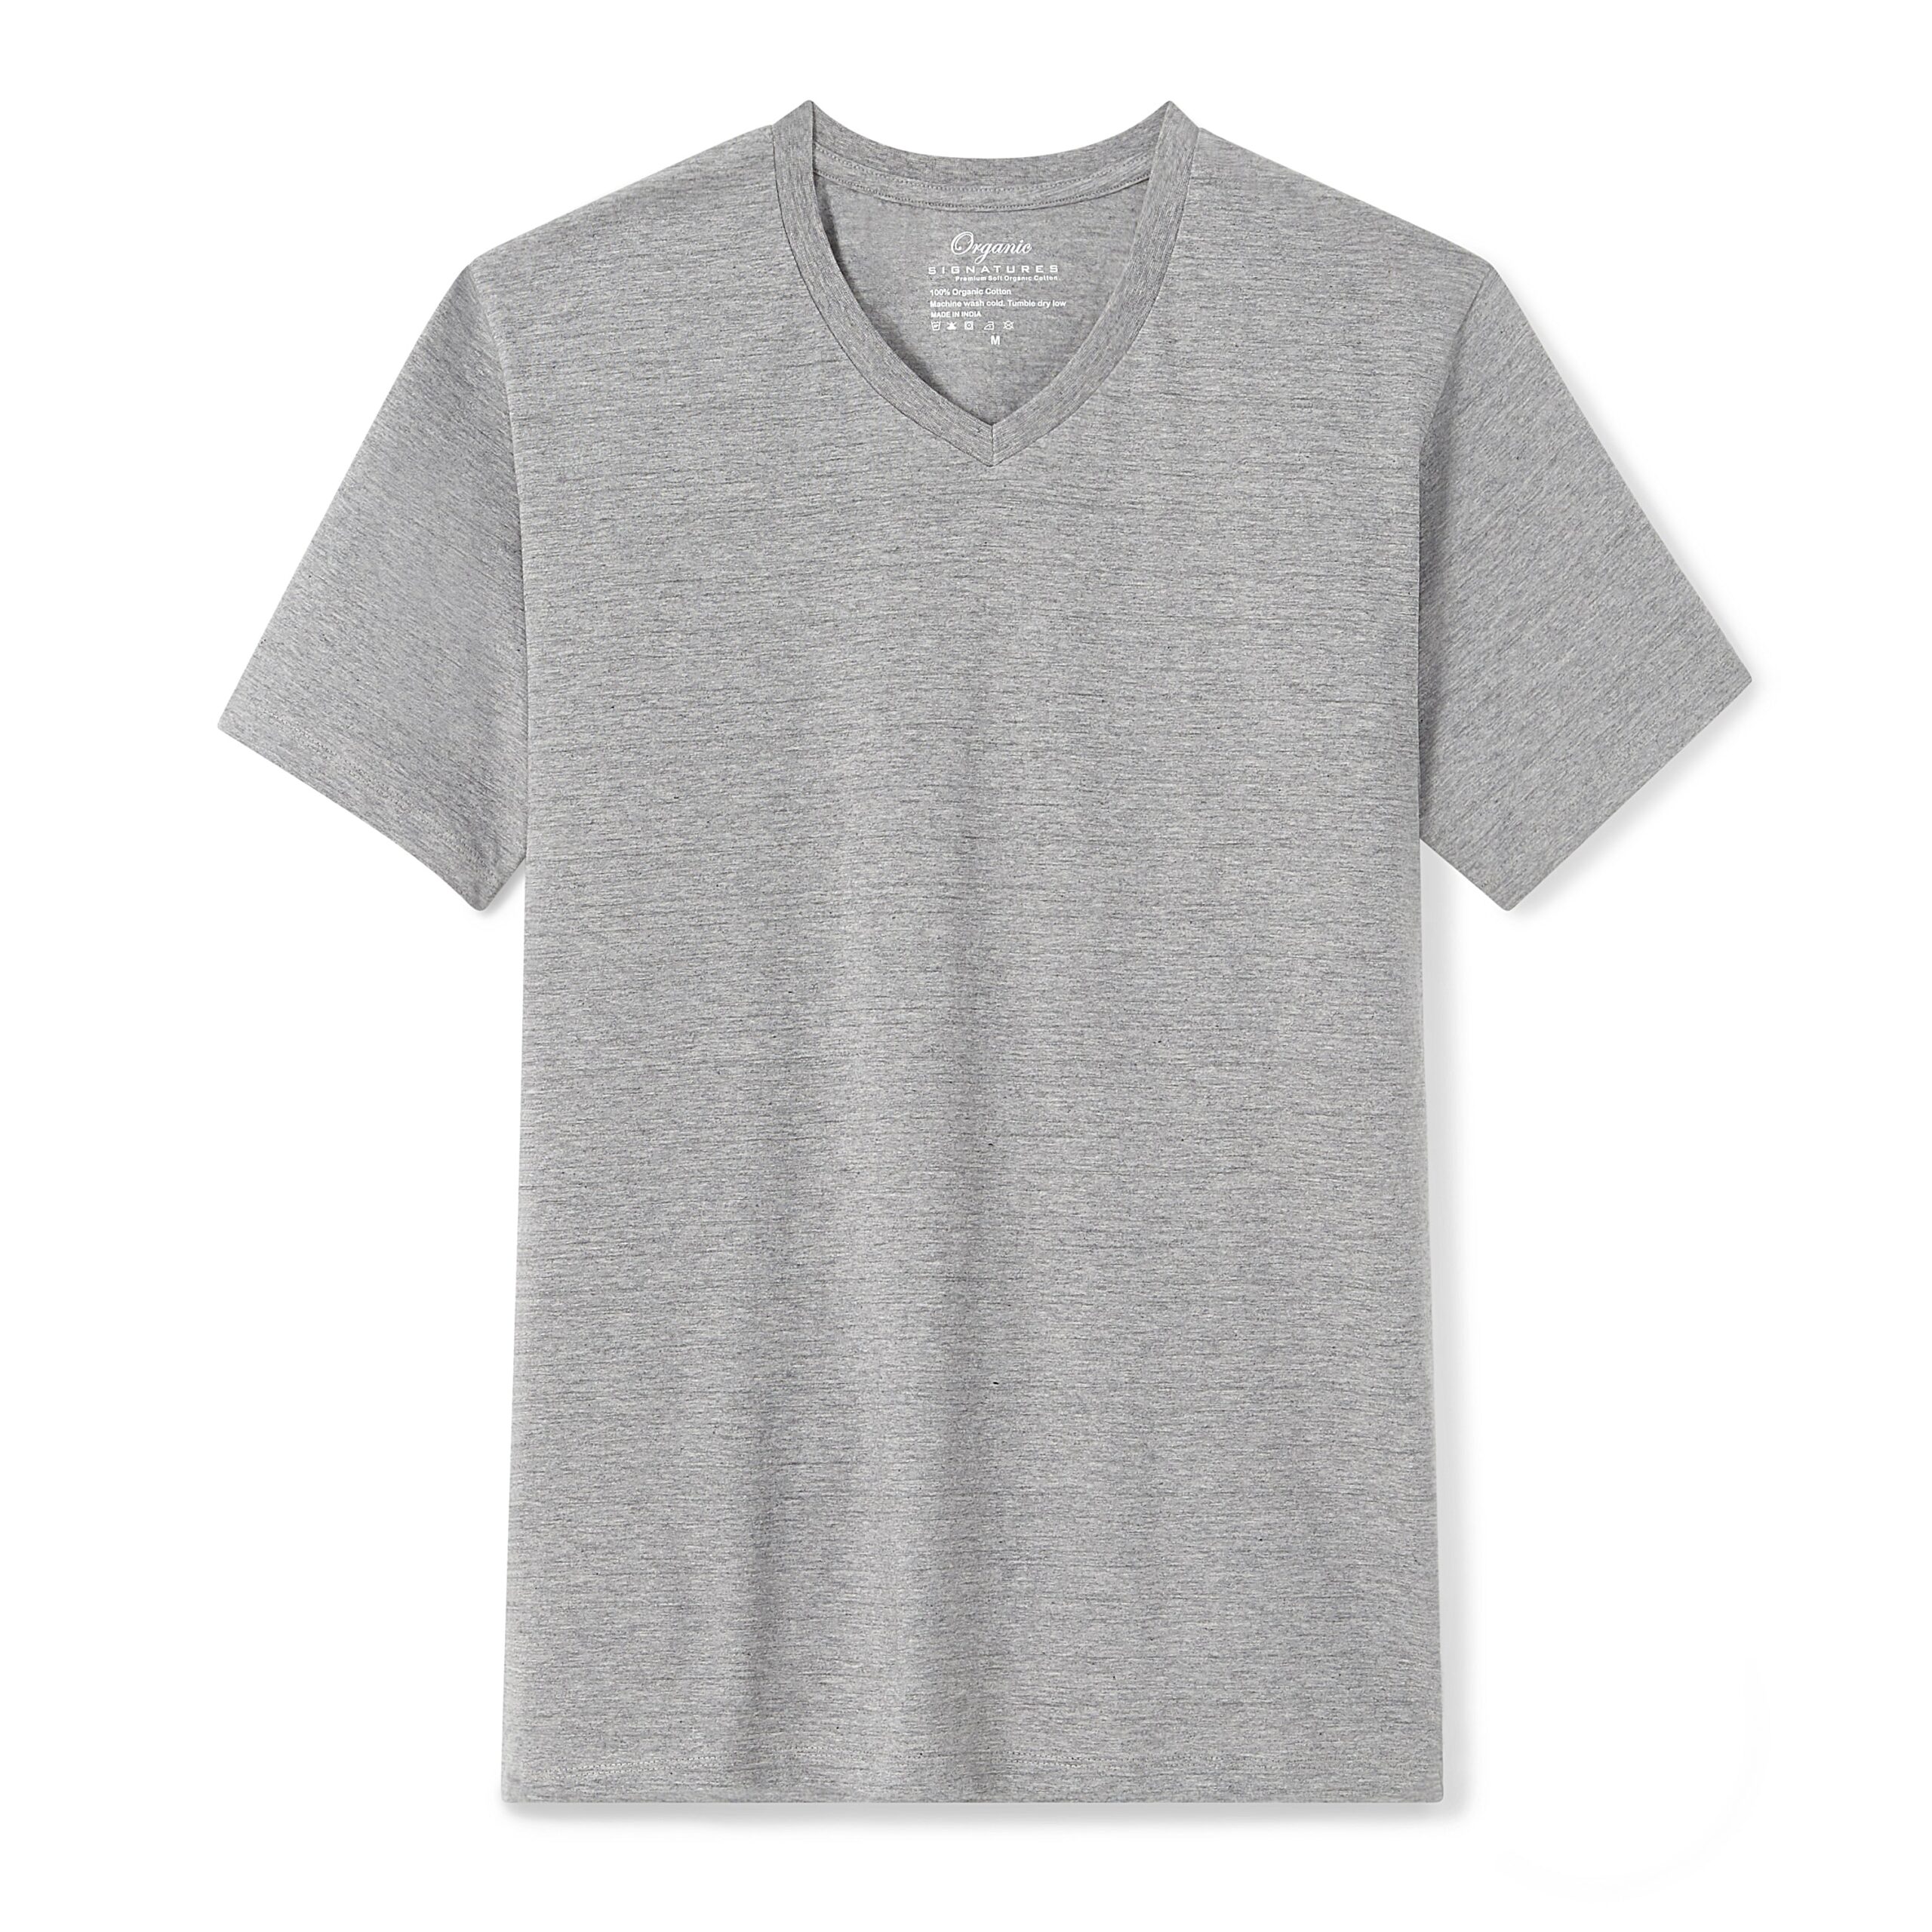 Heather Grey T-Shirt for Men &#8211; V-Neck Short Sleeve